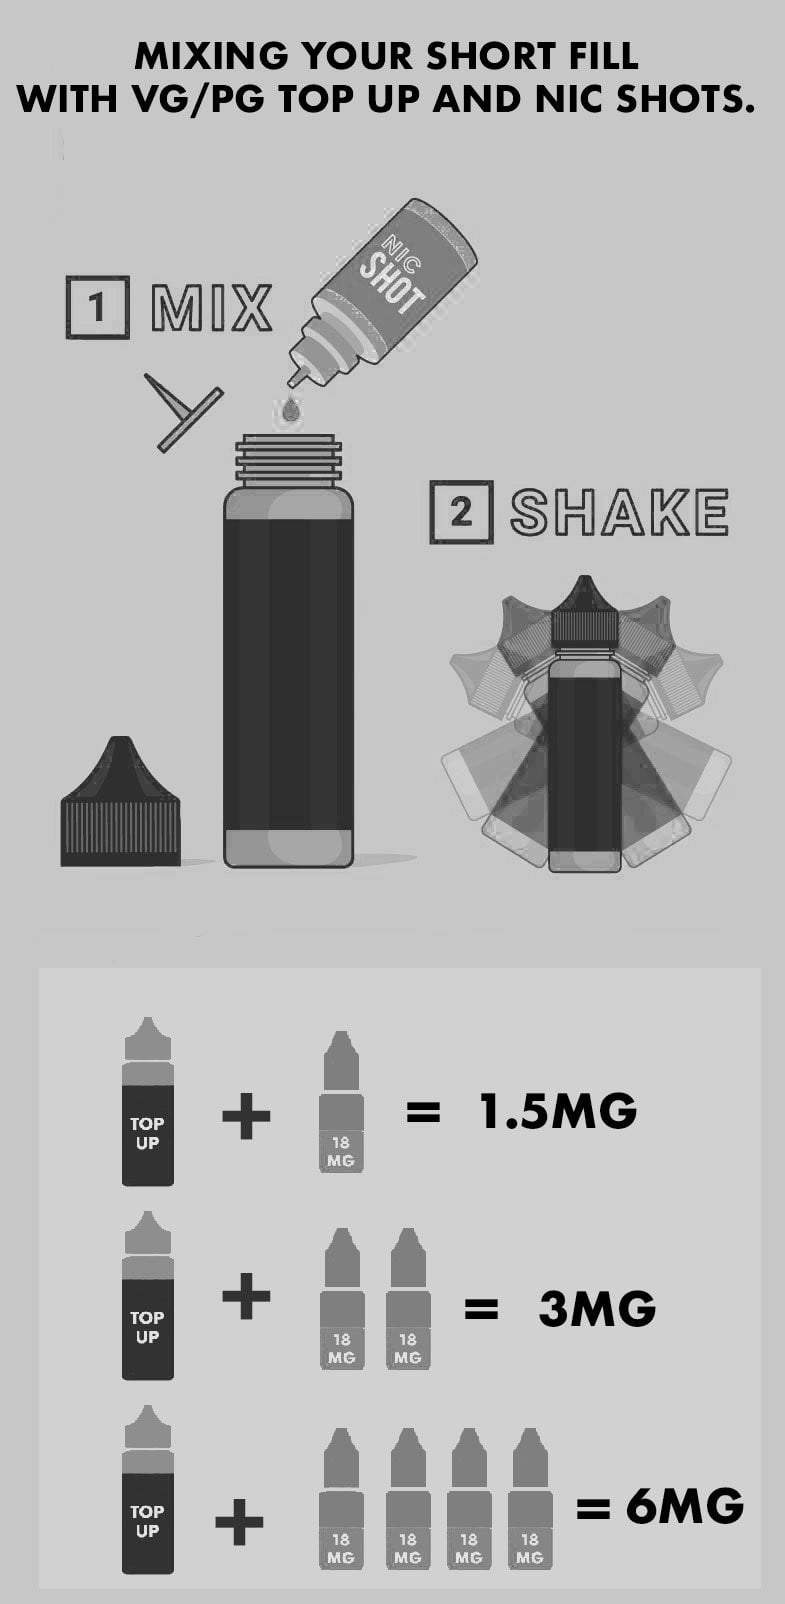 berry blood bomb shots by hodges short fill e-liquid (80ml)120ml